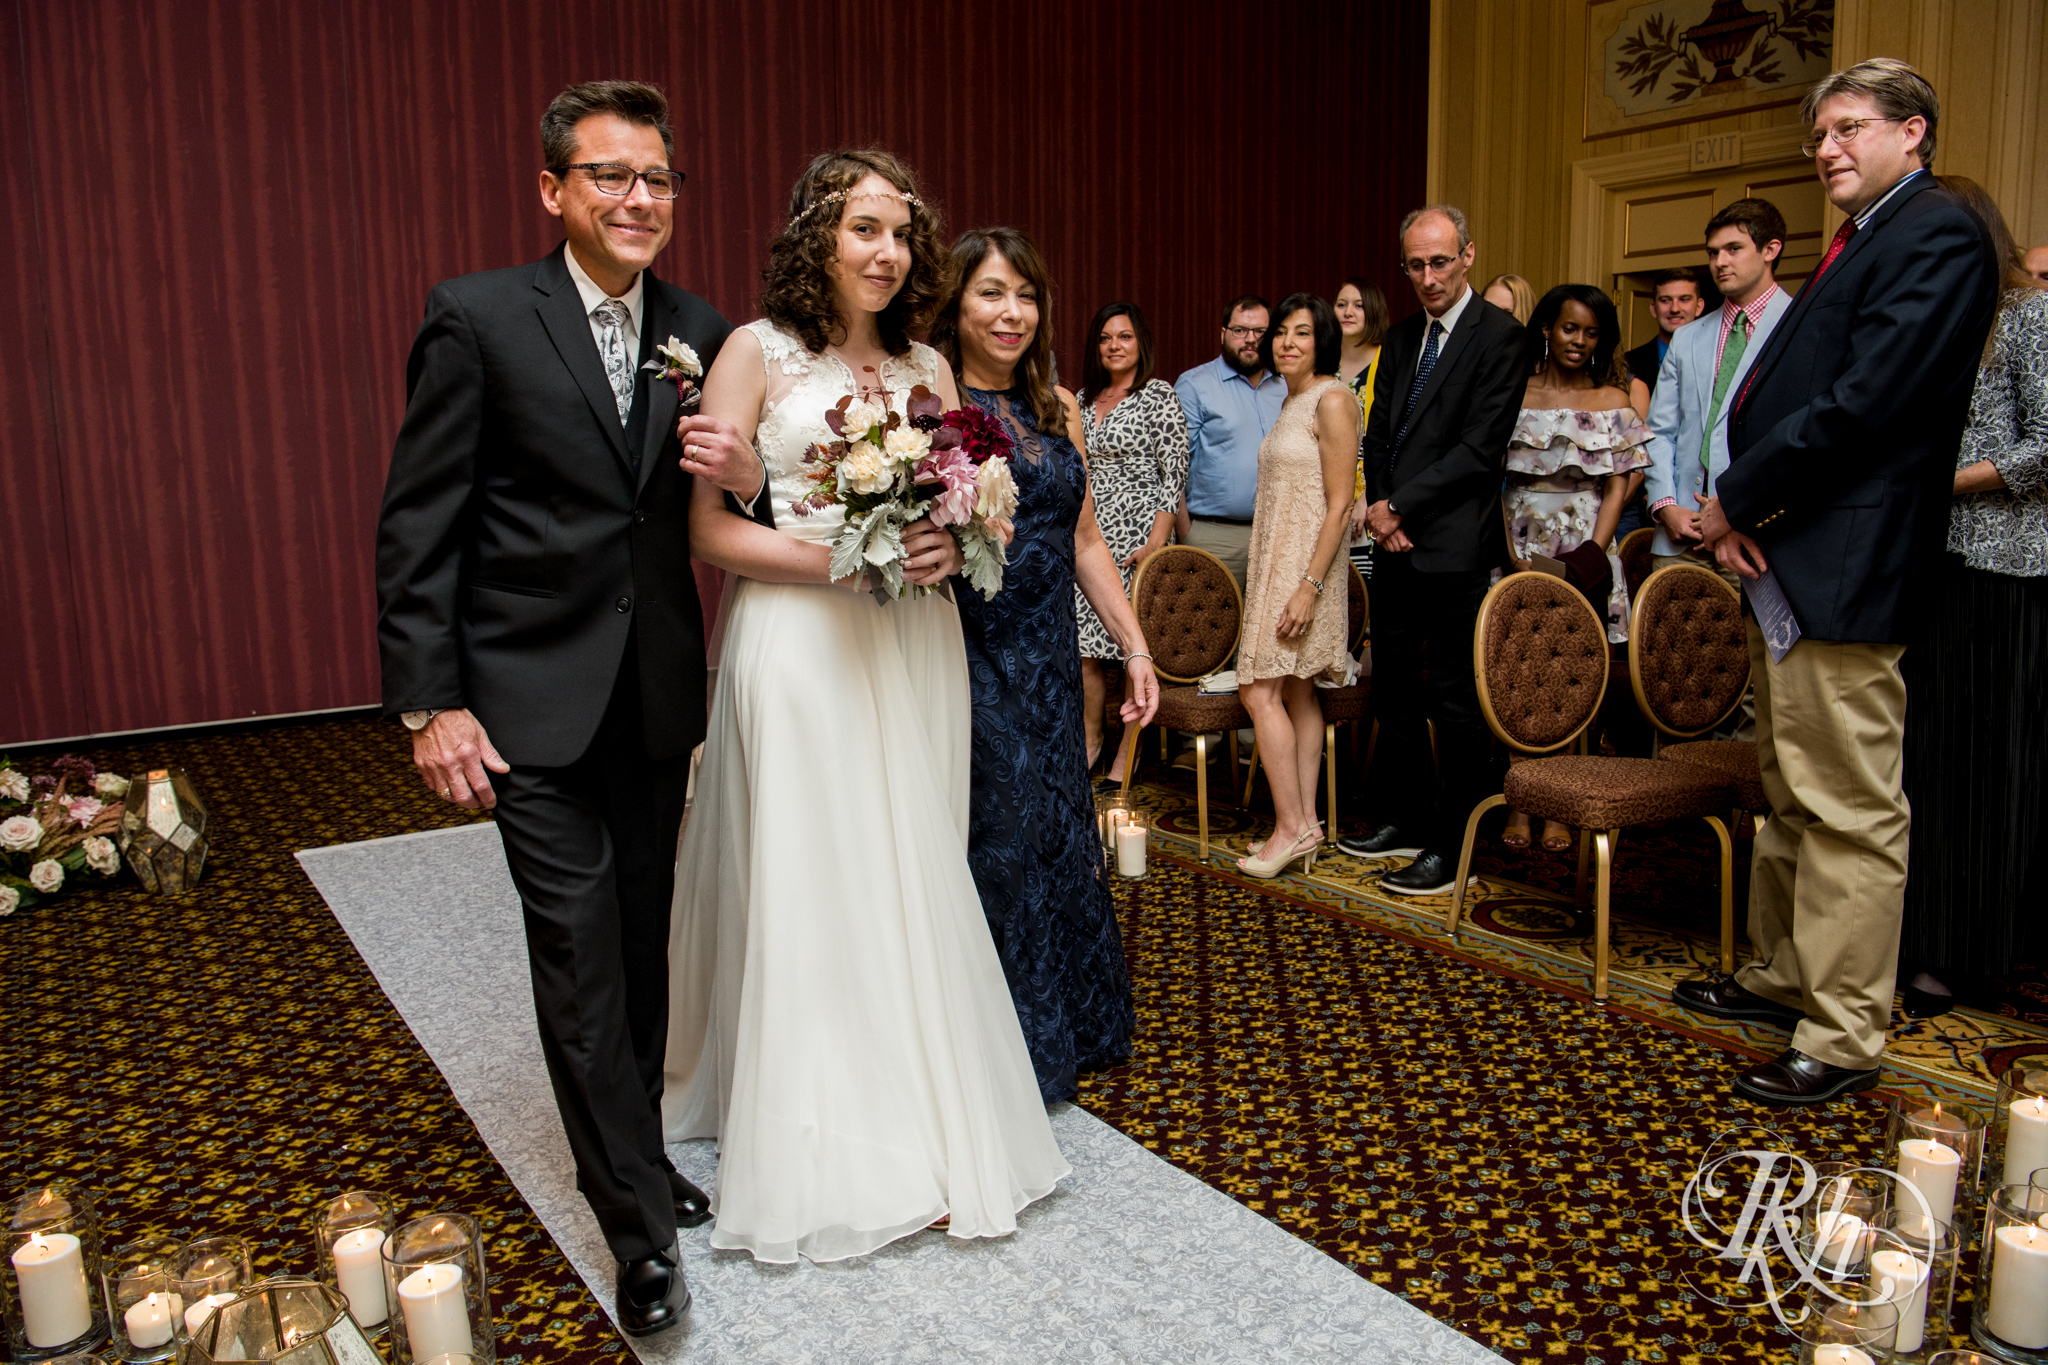 Bride walks down the aisle during wedding ceremony at the Saint Paul Hotel in Saint Paul, Minnesota.